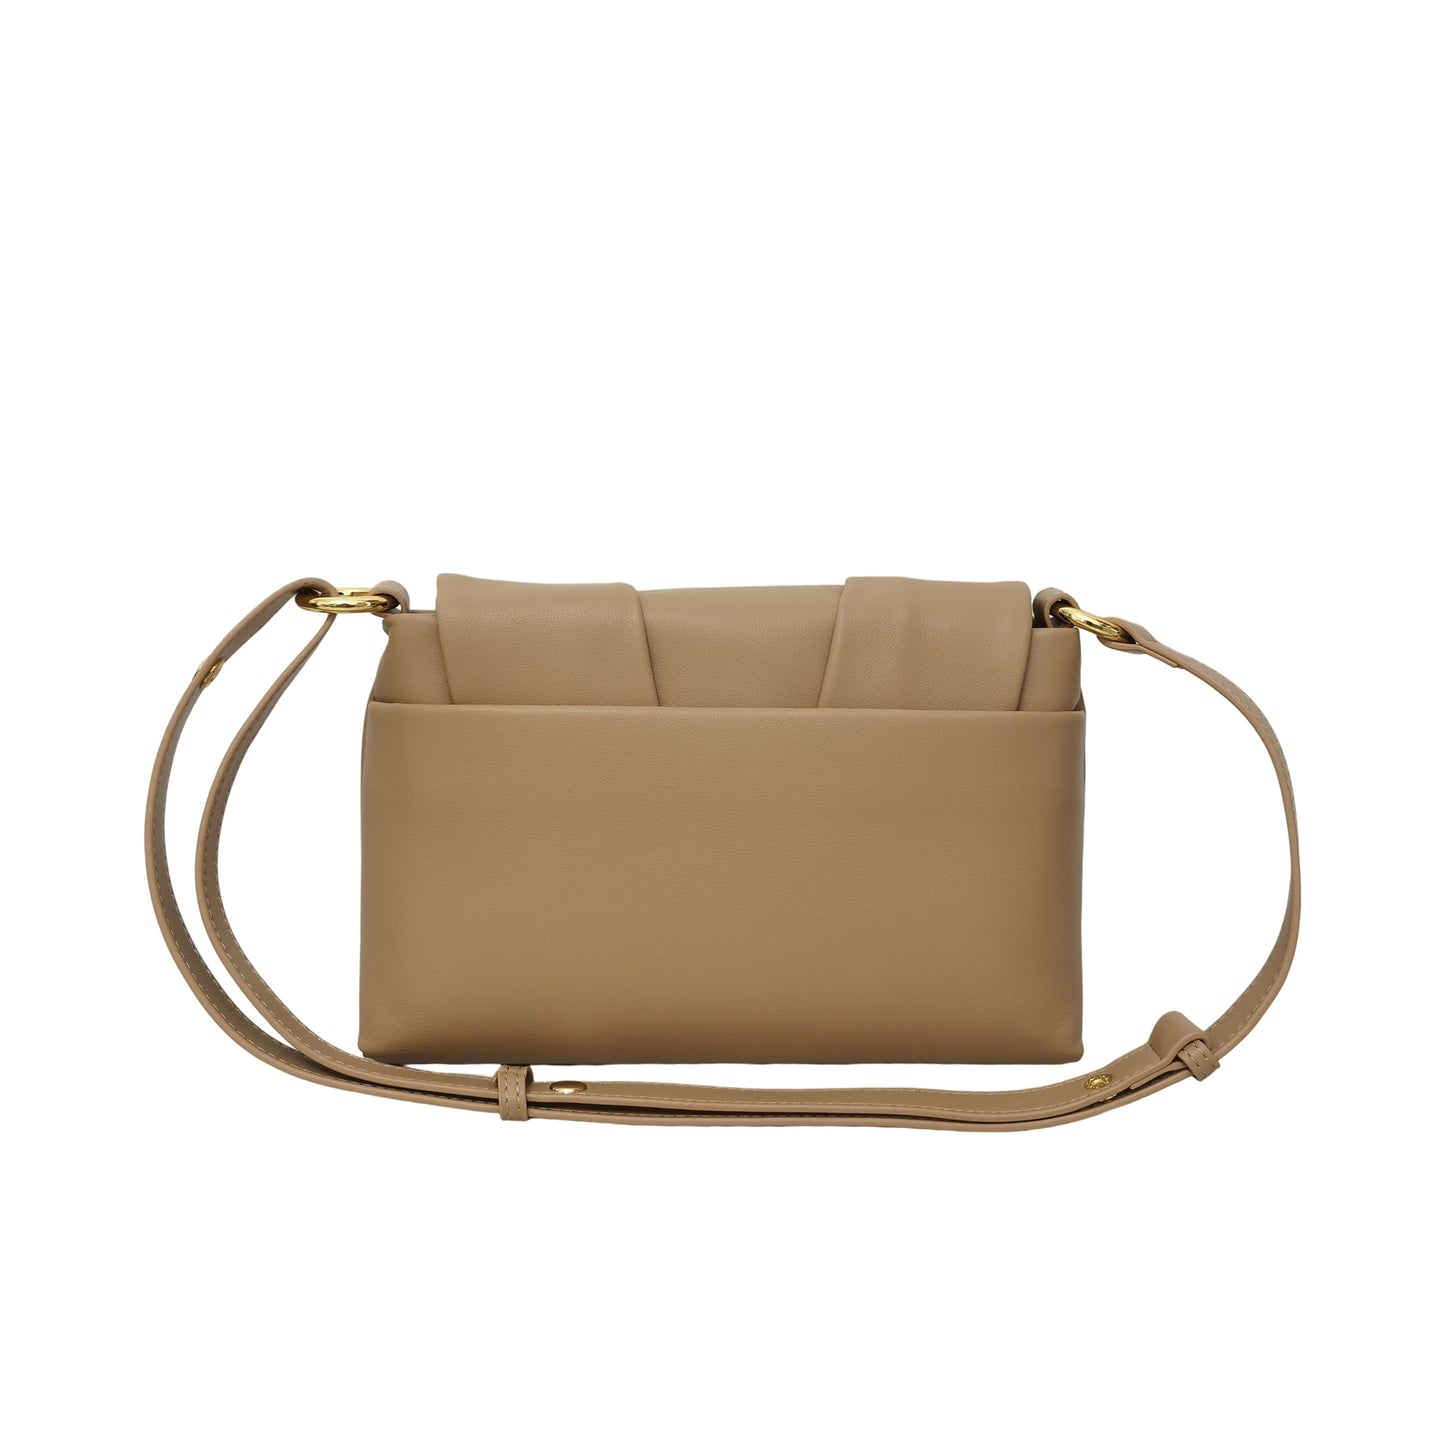 Women's genuine cowhide leather messenger satchel bag handbag Boite fold design